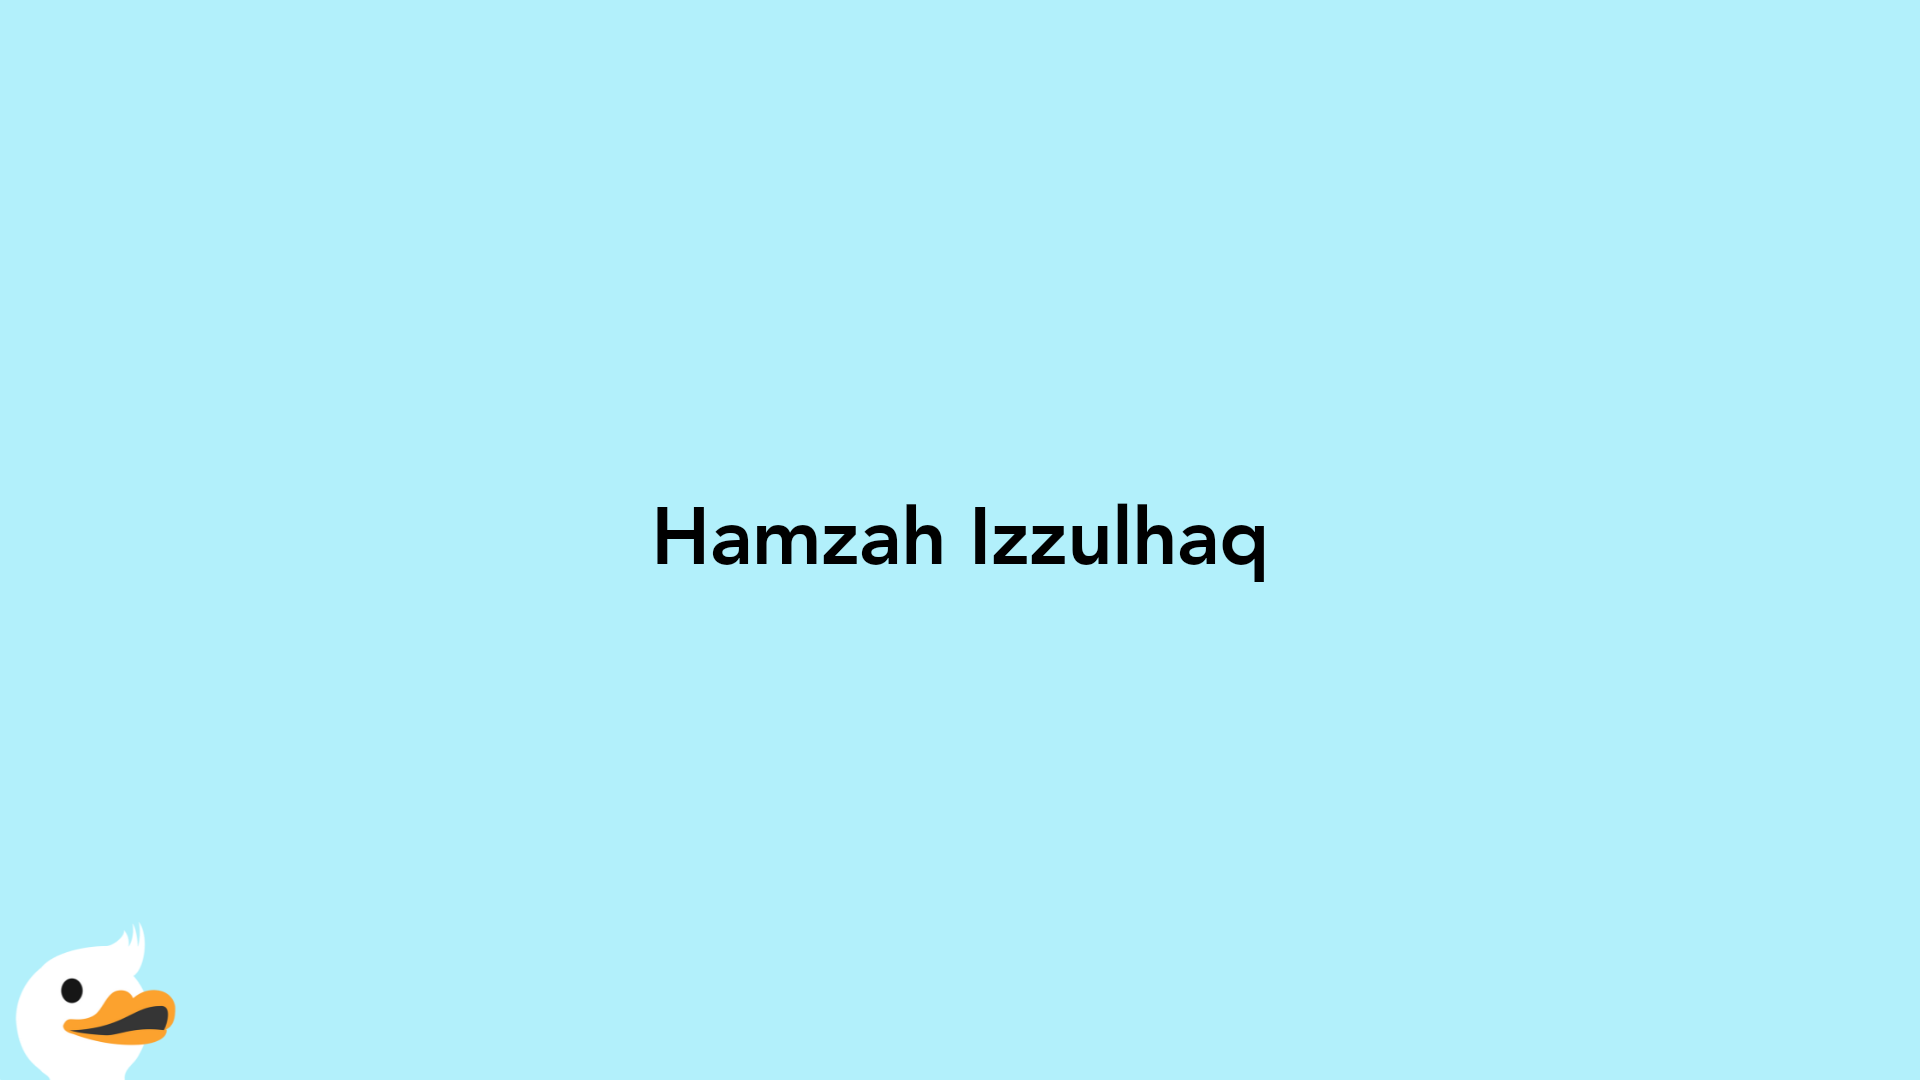 Hamzah Izzulhaq